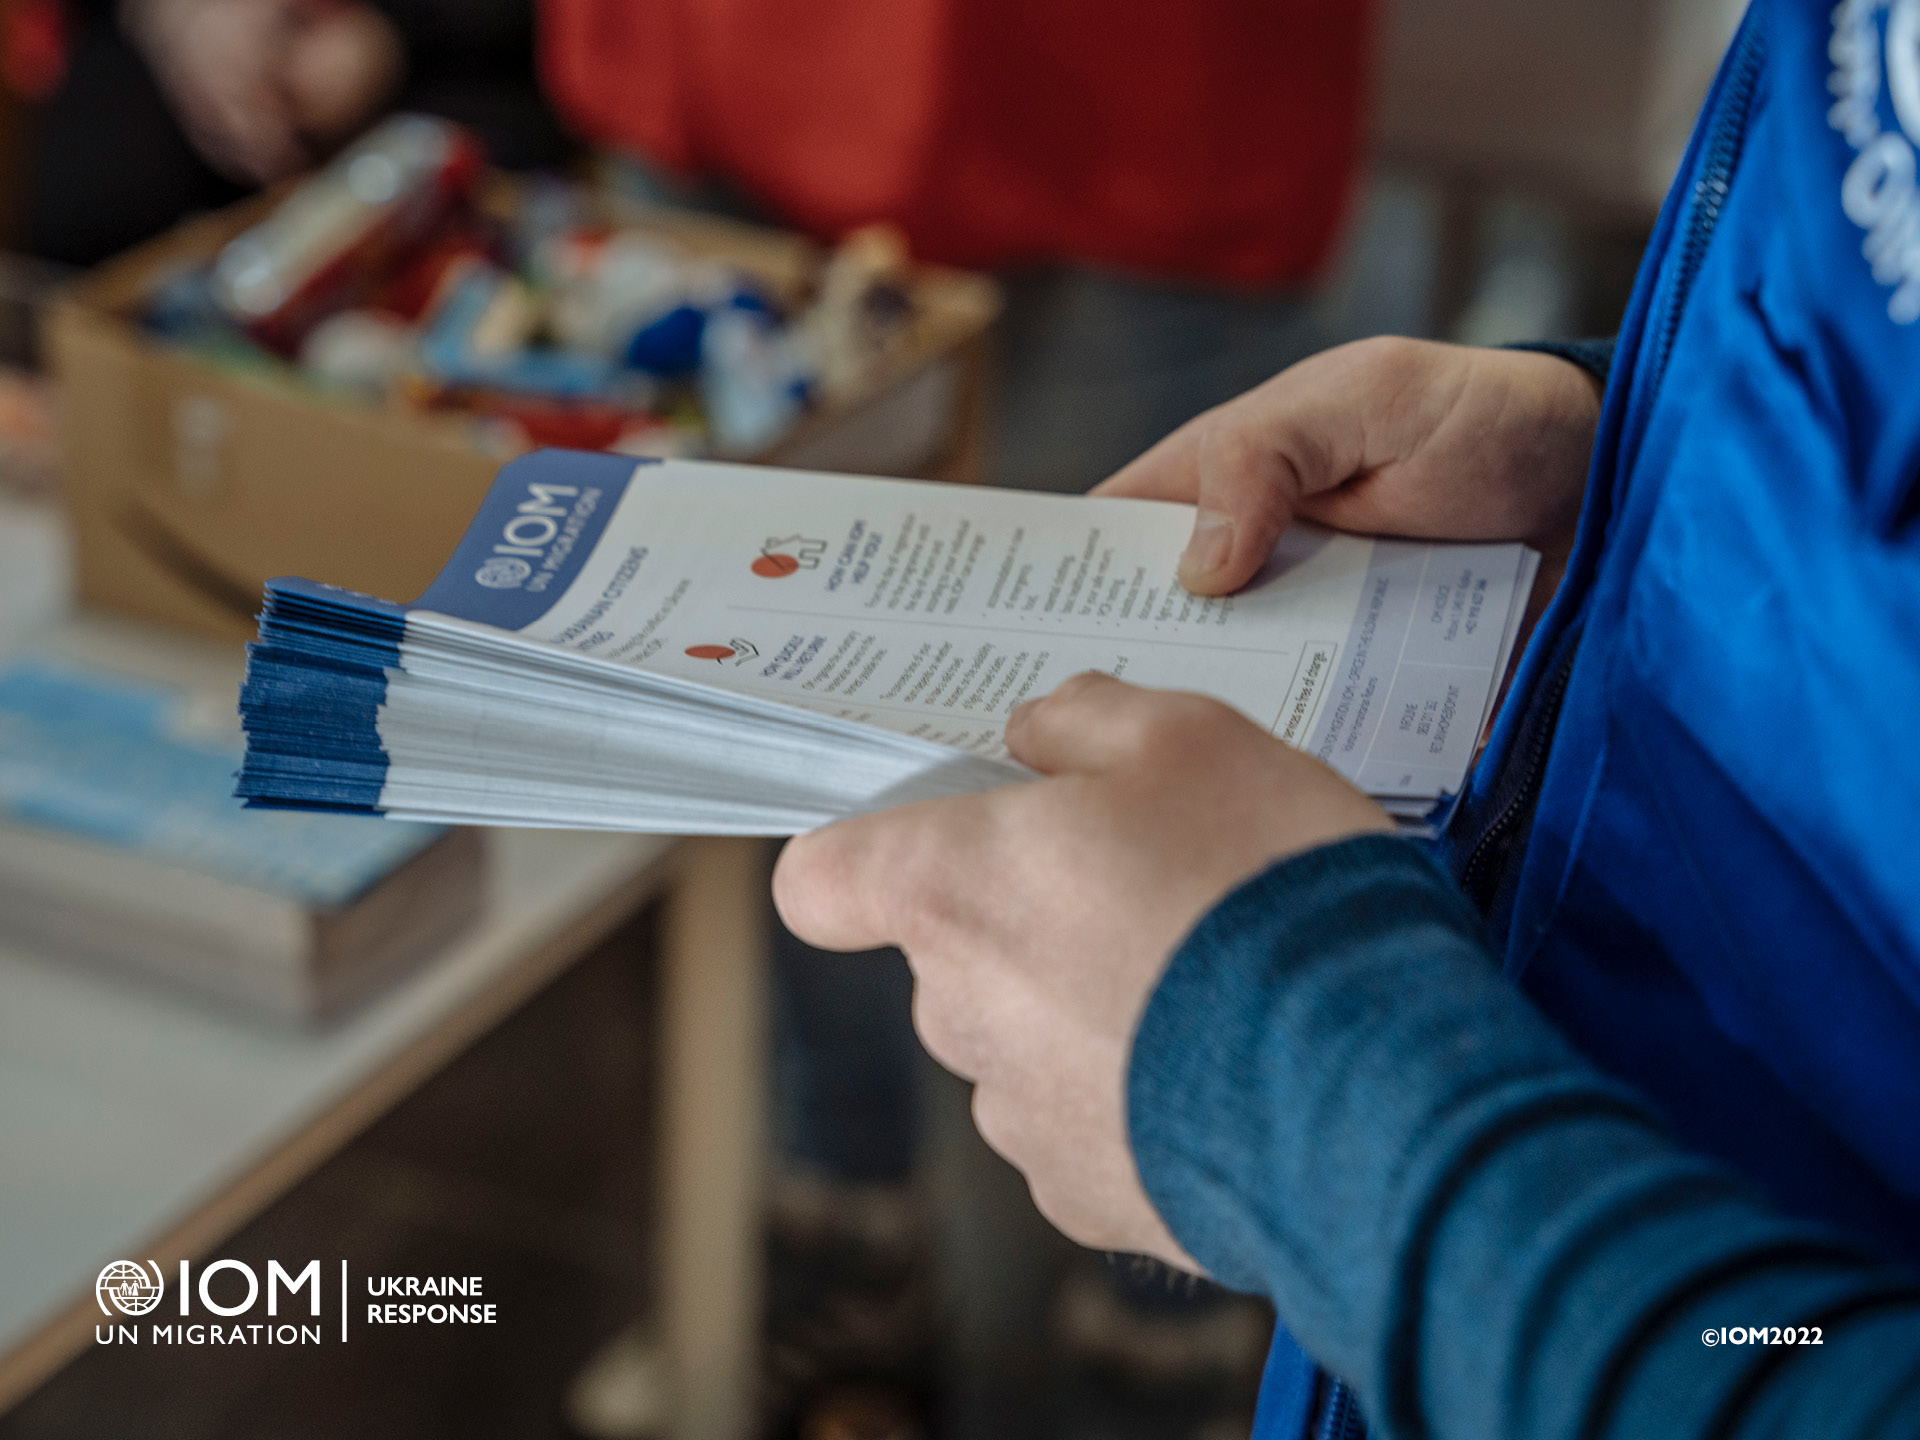 IOM remote assistance to Ukrainian refugees and non-European Union (EU) nationals. Photo © International Organization for Migration (IOM) 2022.